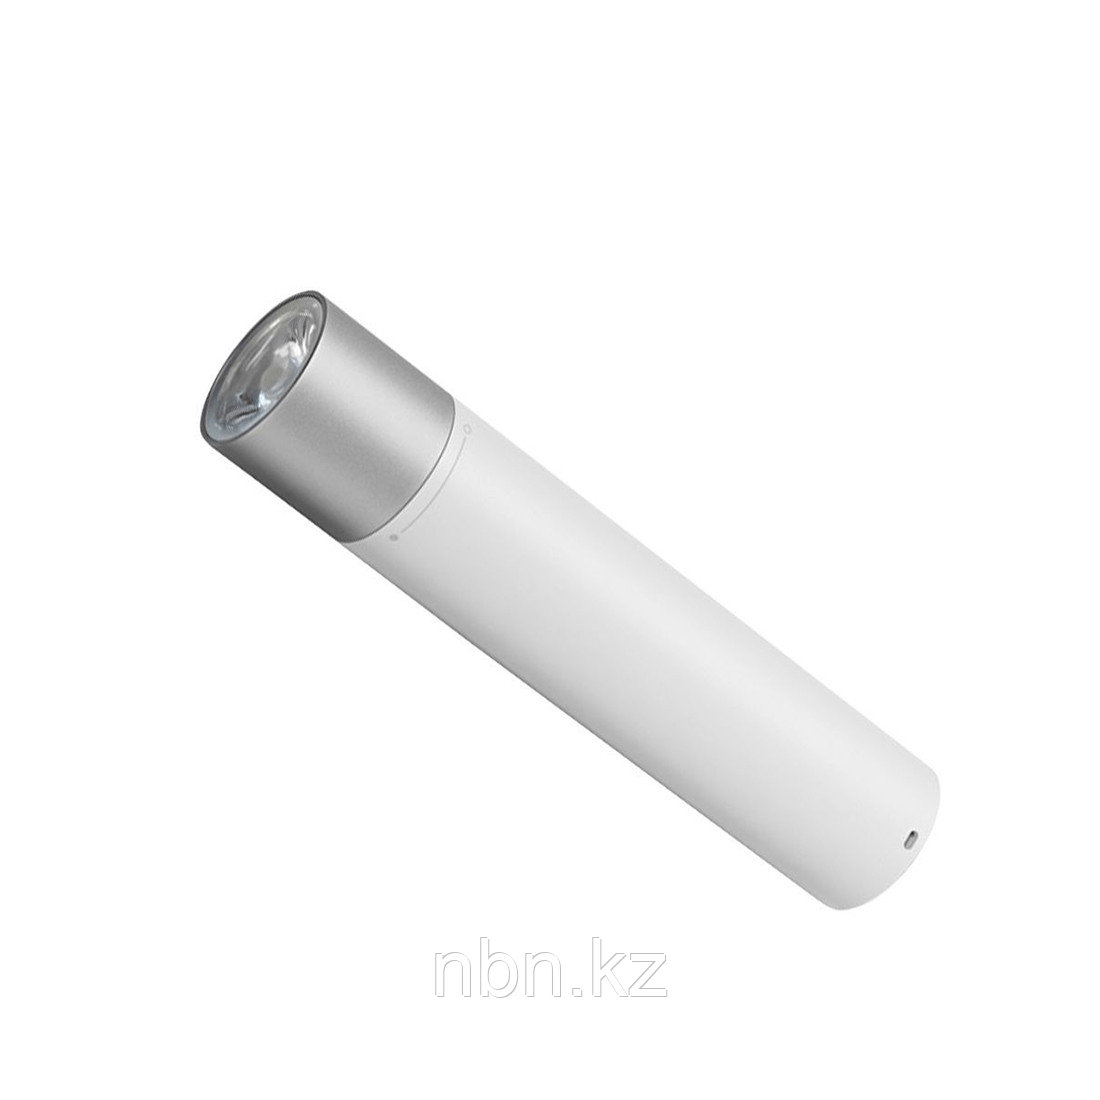 Портативное зарядное устройство Xiaomi 3250 mAh Mi Power Bank Flashlight, фото 1